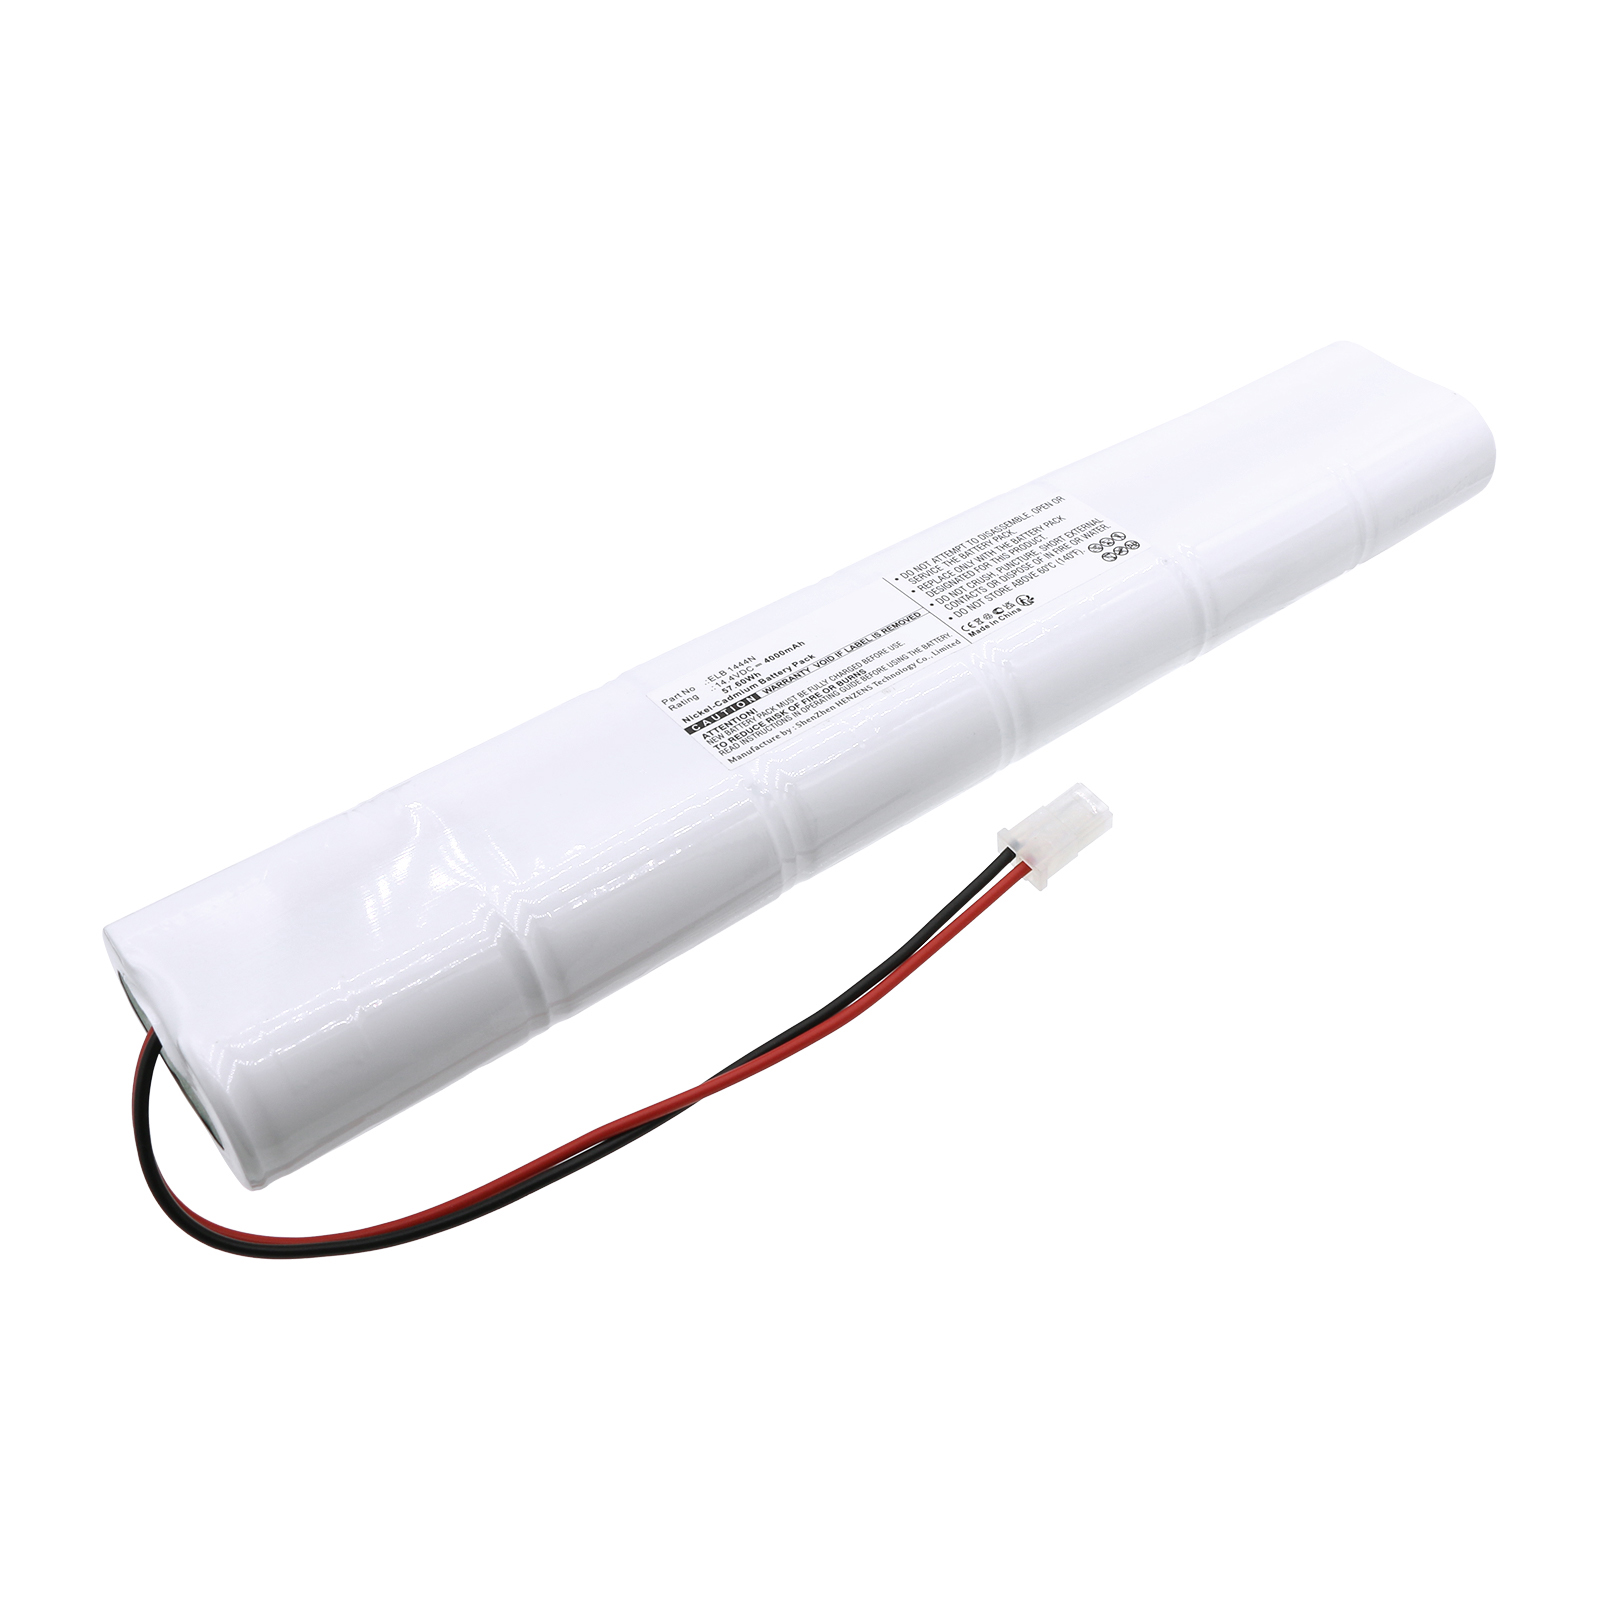 Synergy Digital Emergency Lighting Battery, Compatible with Lithonia ELB 1444N Emergency Lighting Battery (Ni-CD, 14.4V, 4000mAh)